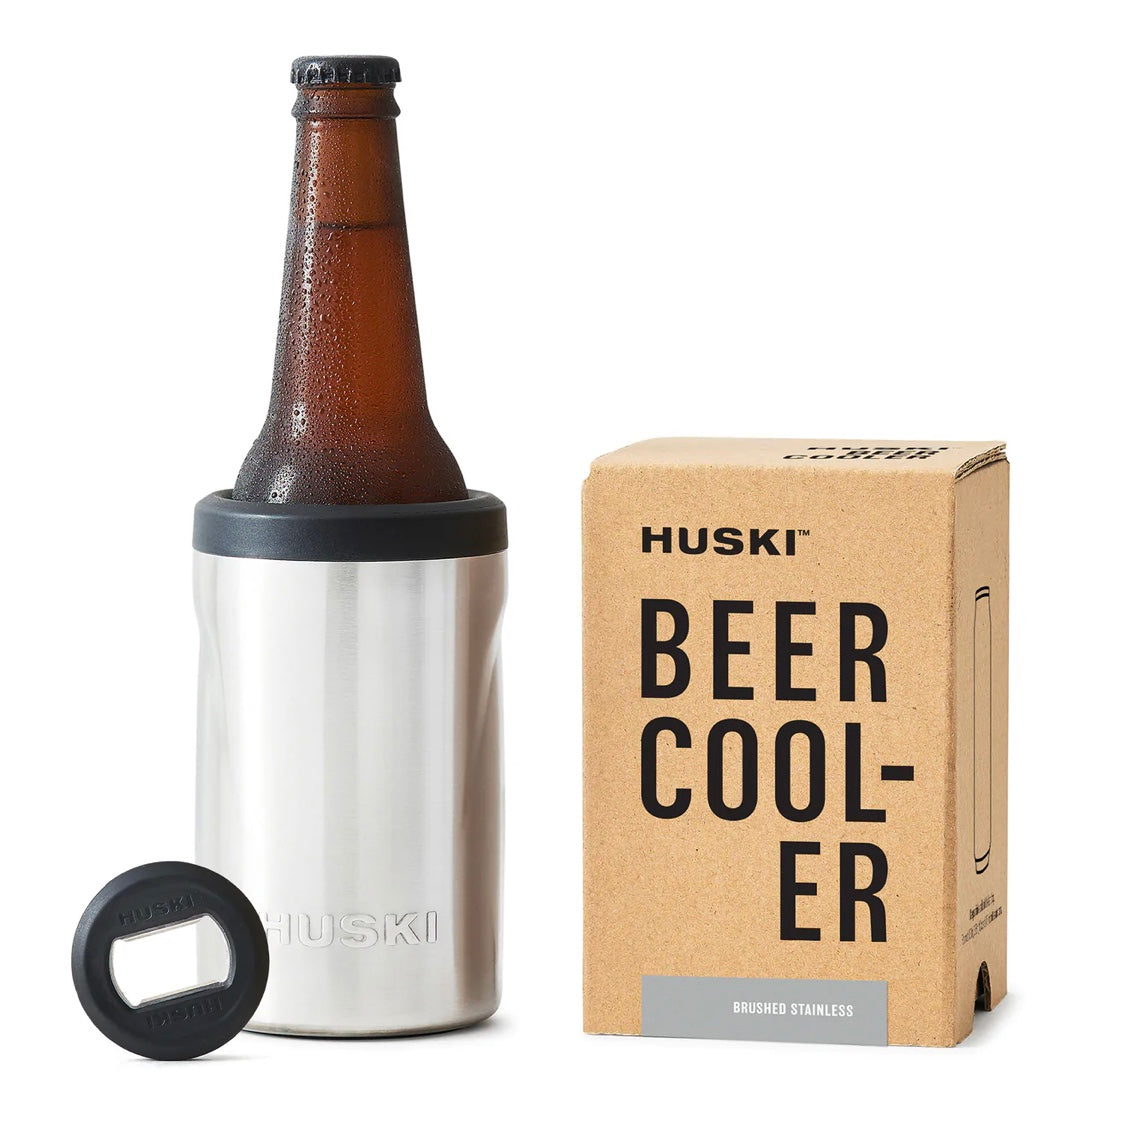 Huski Beer Cooler -Brushed Stainless